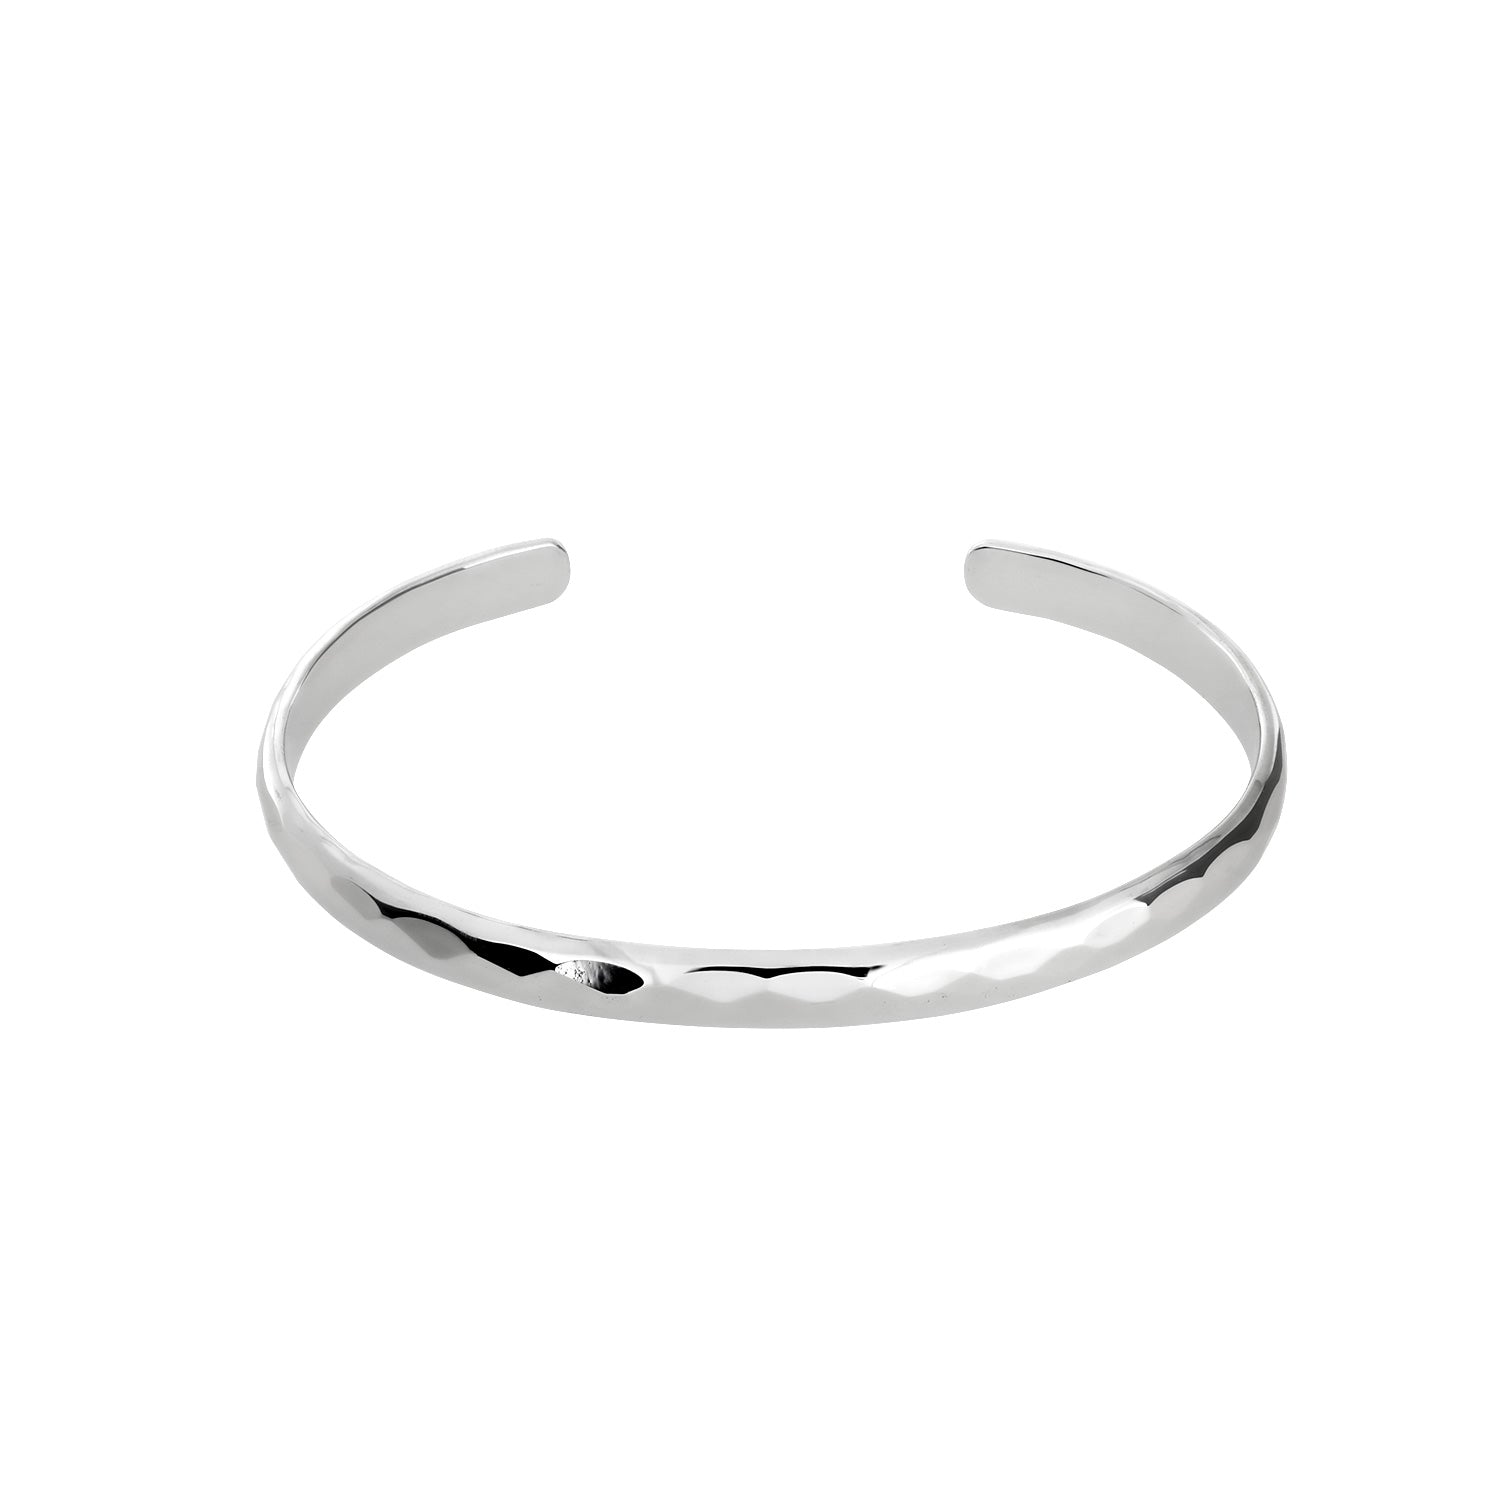 double bangle V bracelet – claudia A. designs